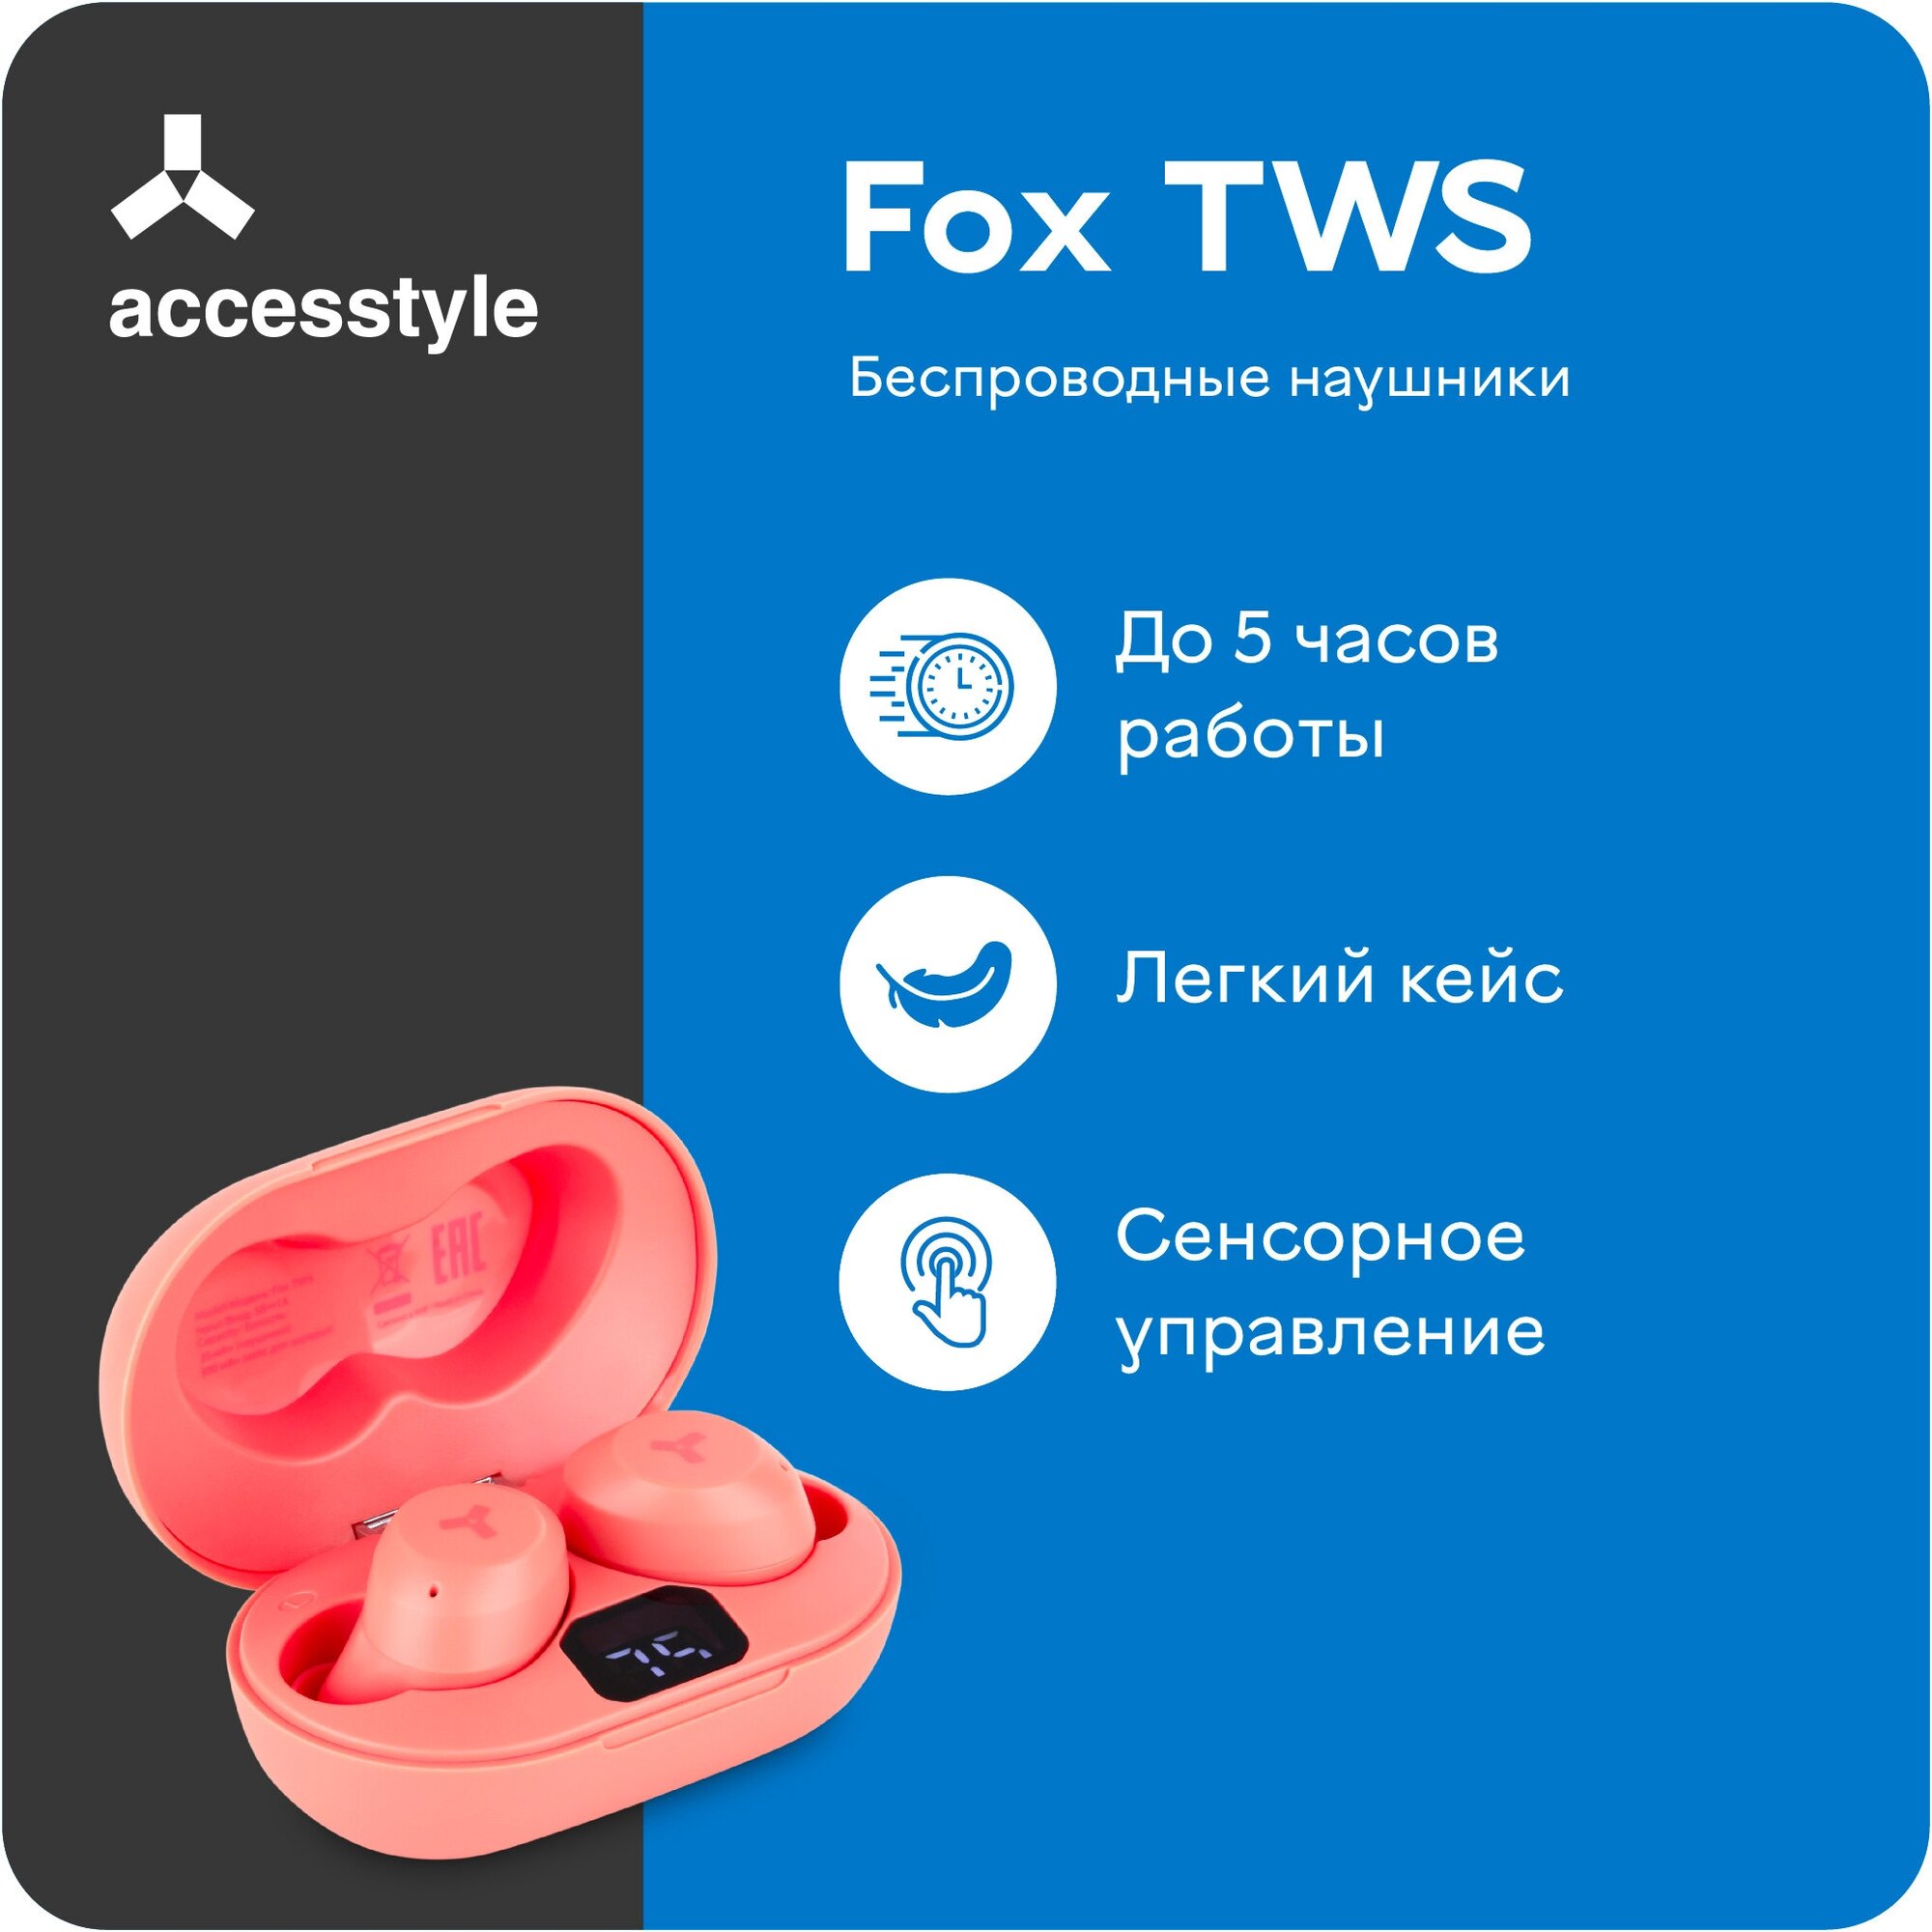 Беспроводные TWS-наушники Accesstyle Fox TWS